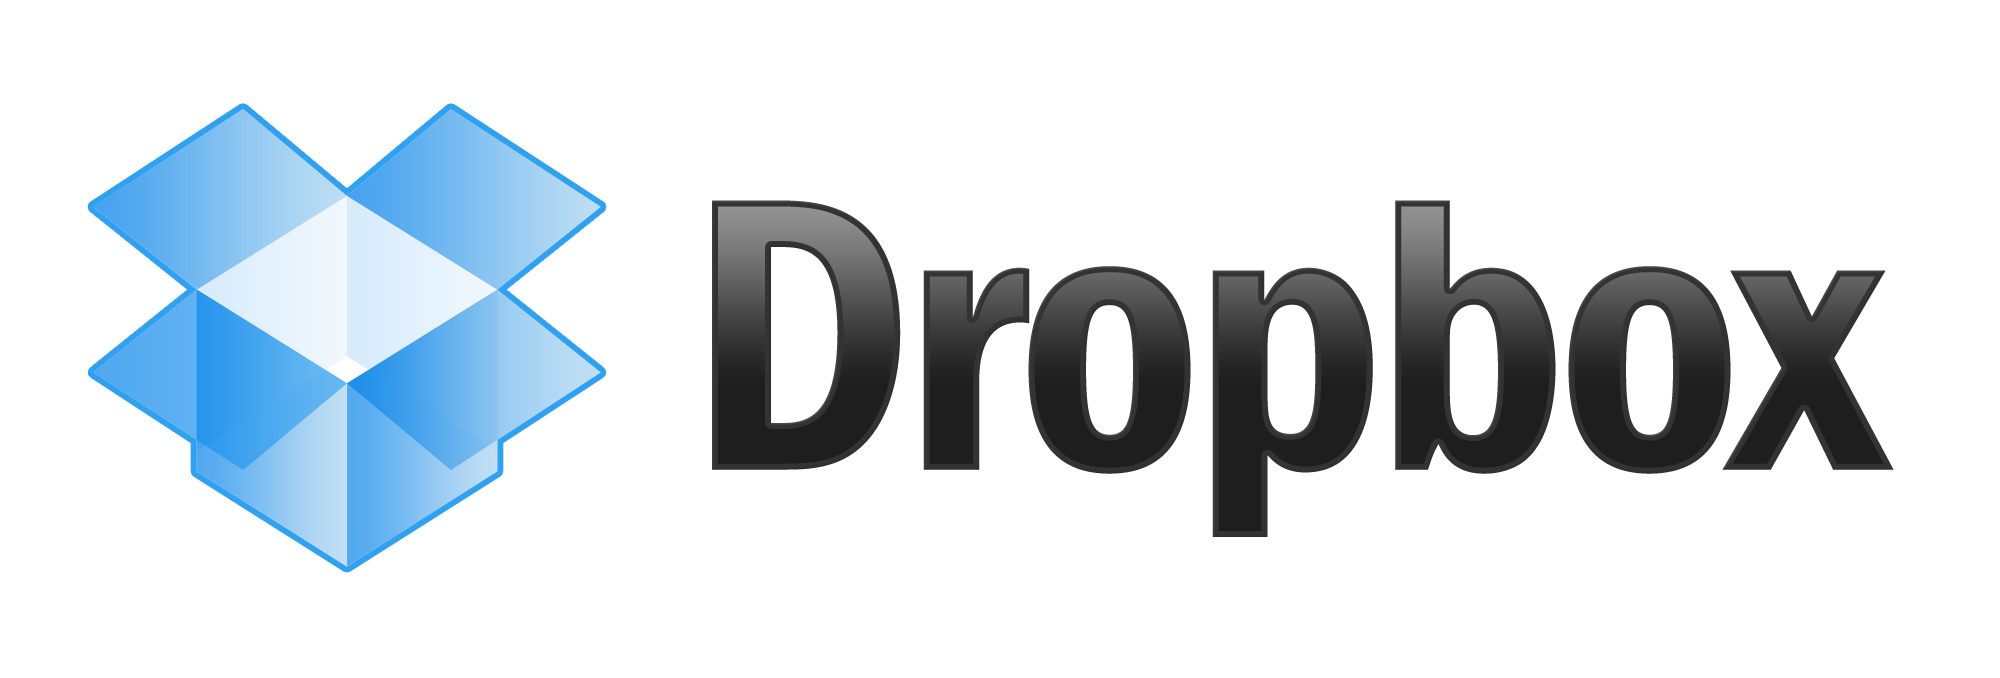 DropBox App